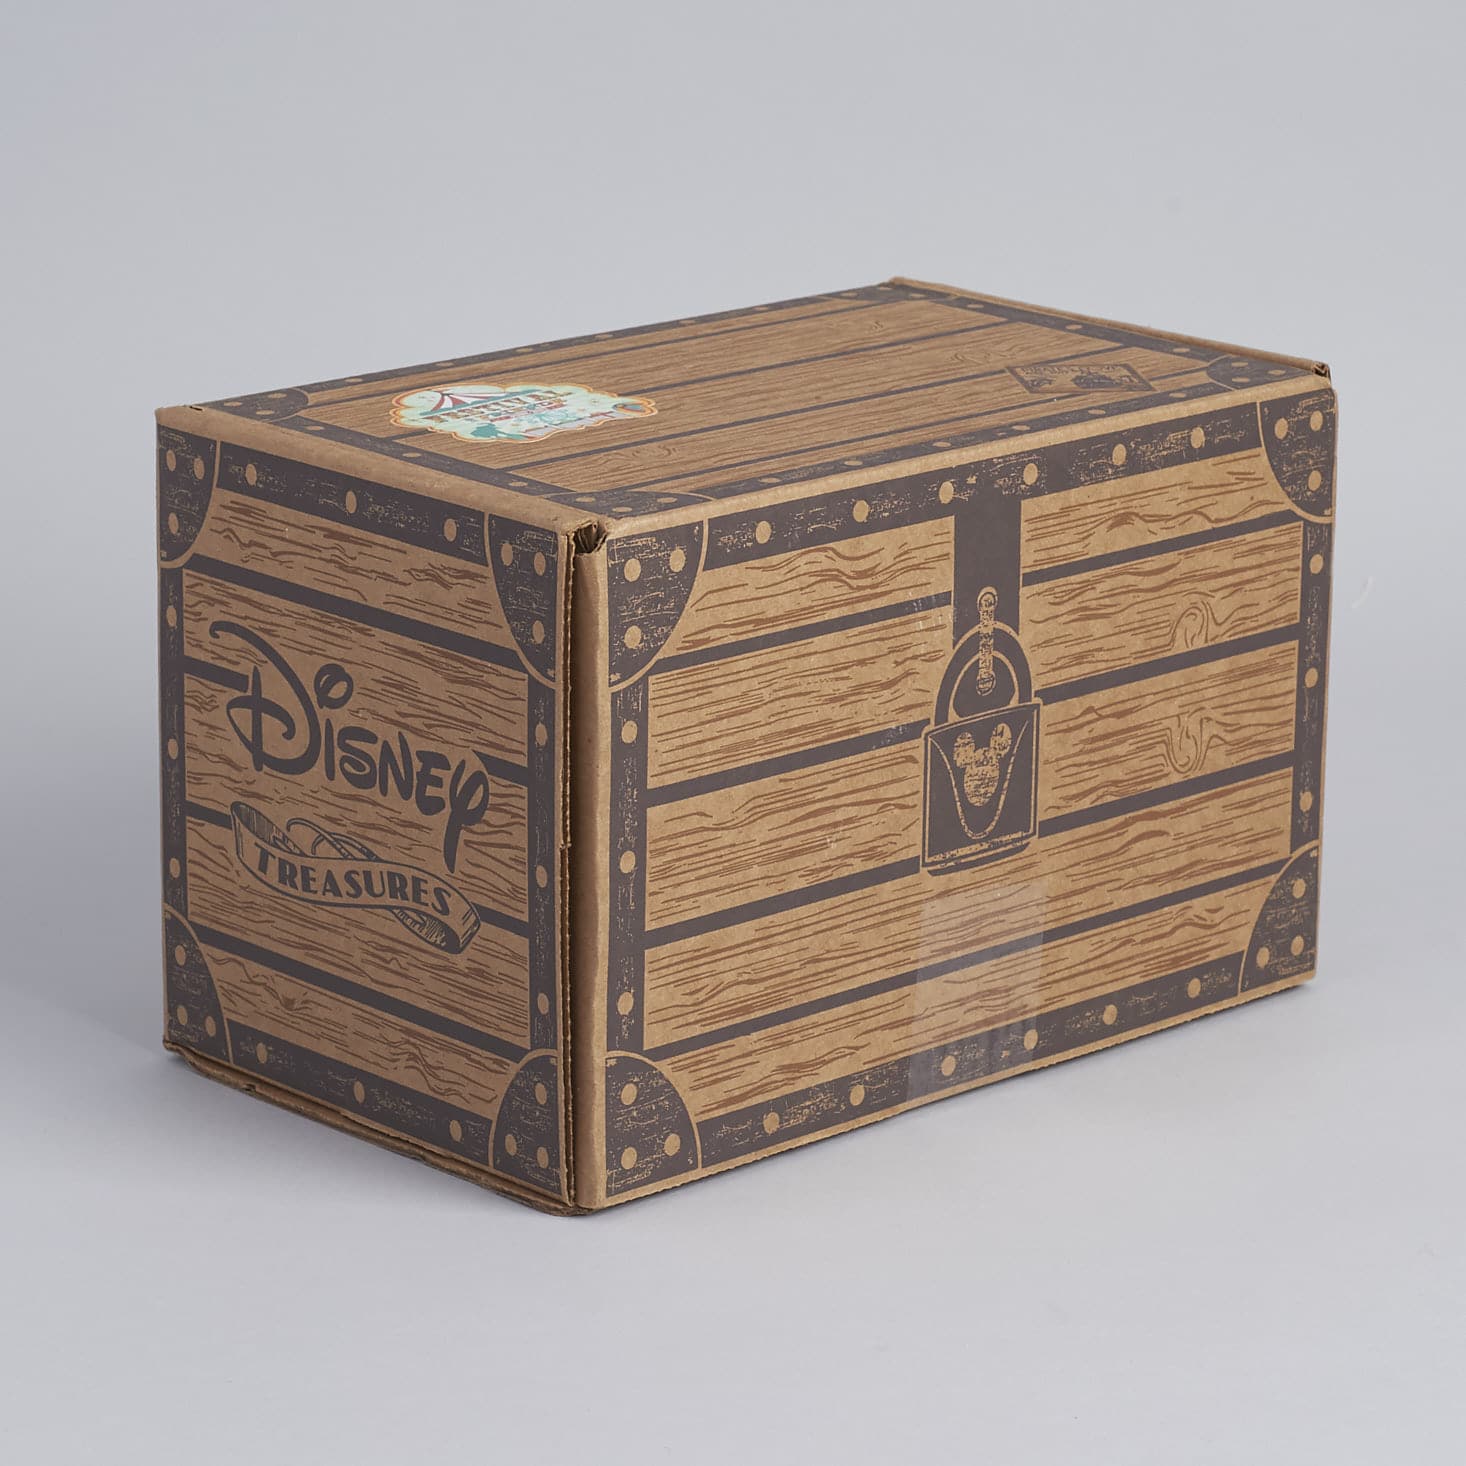 Disney Treasures Subscription Box Review – June 2017